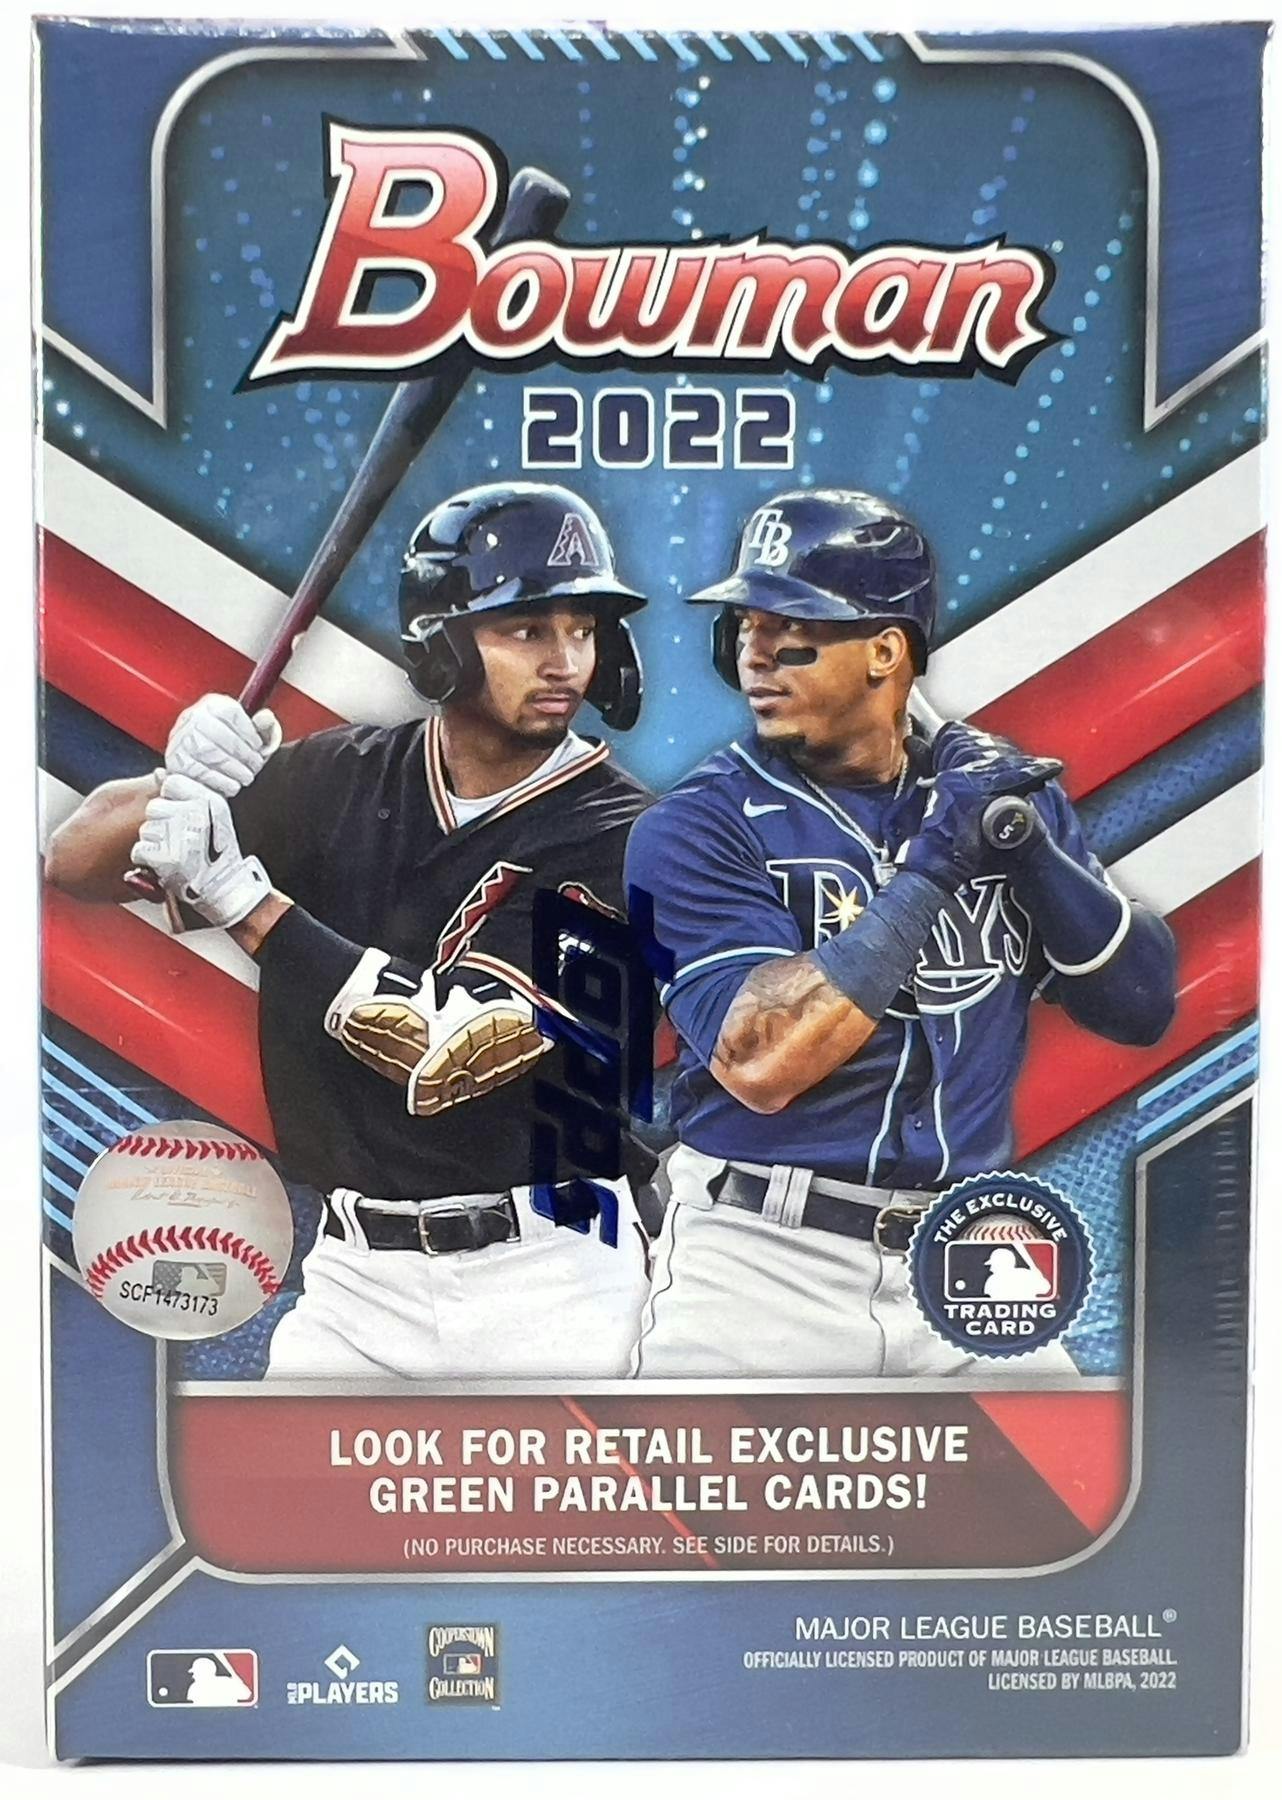 2022 Bowman Baseball Checklist, Set Info, Chrome Details, Boxes